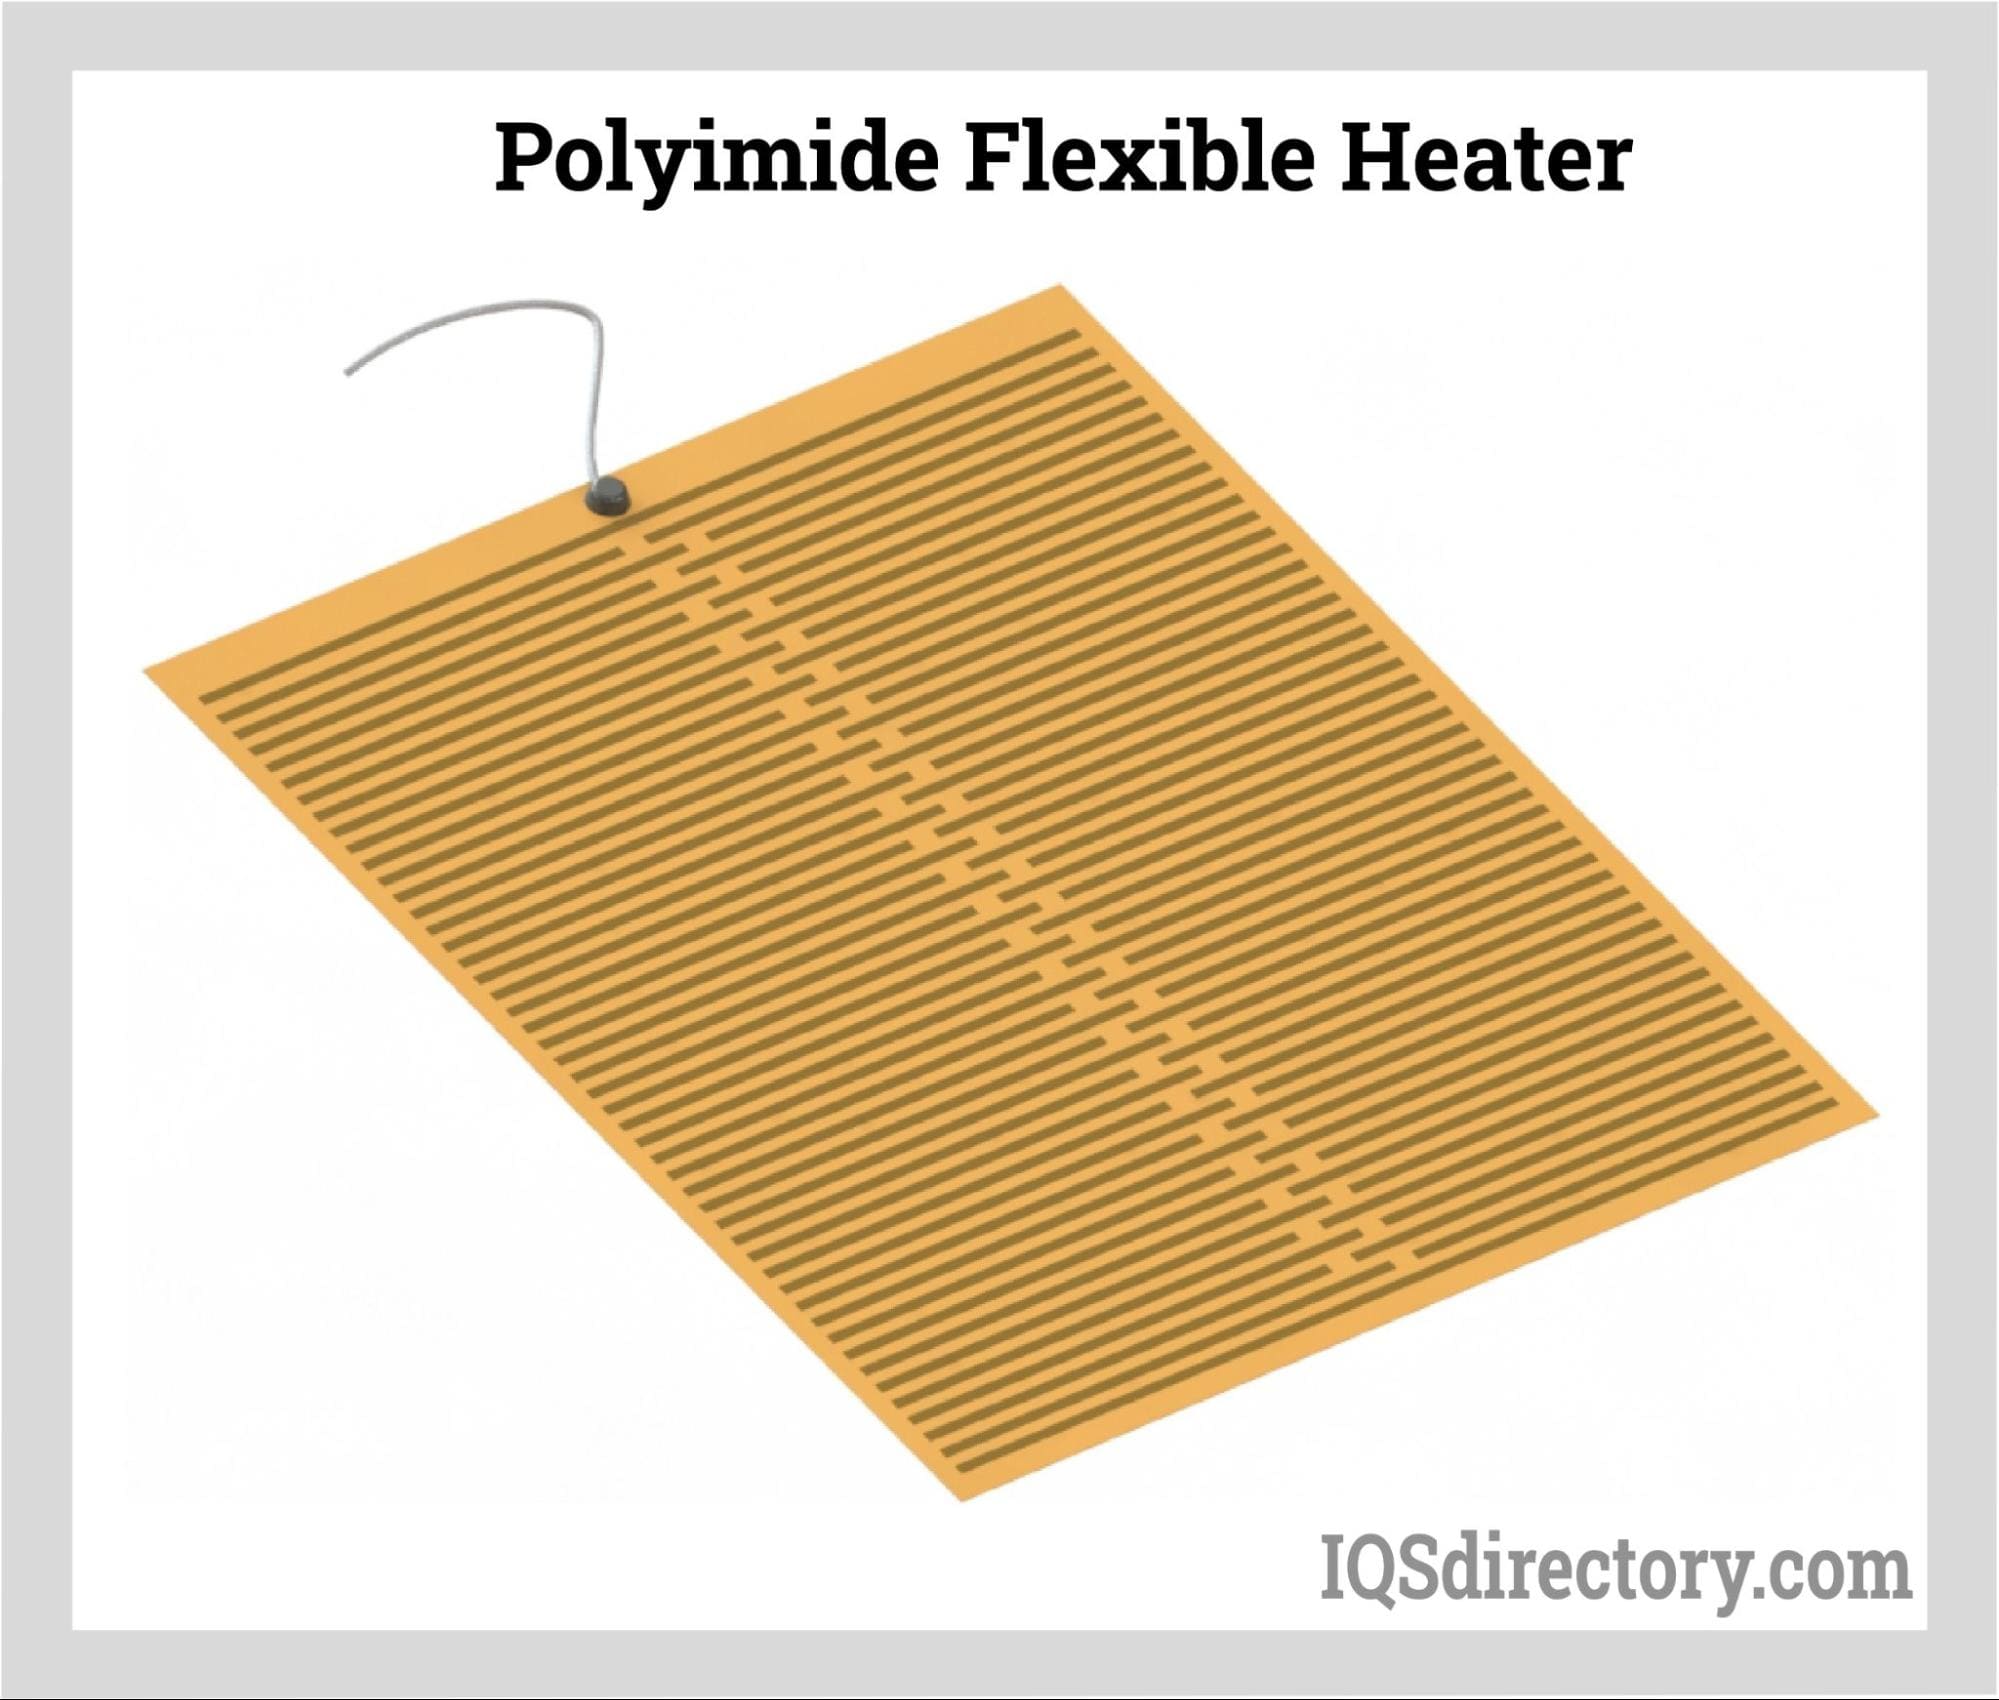 Polyimide Flexible Heater